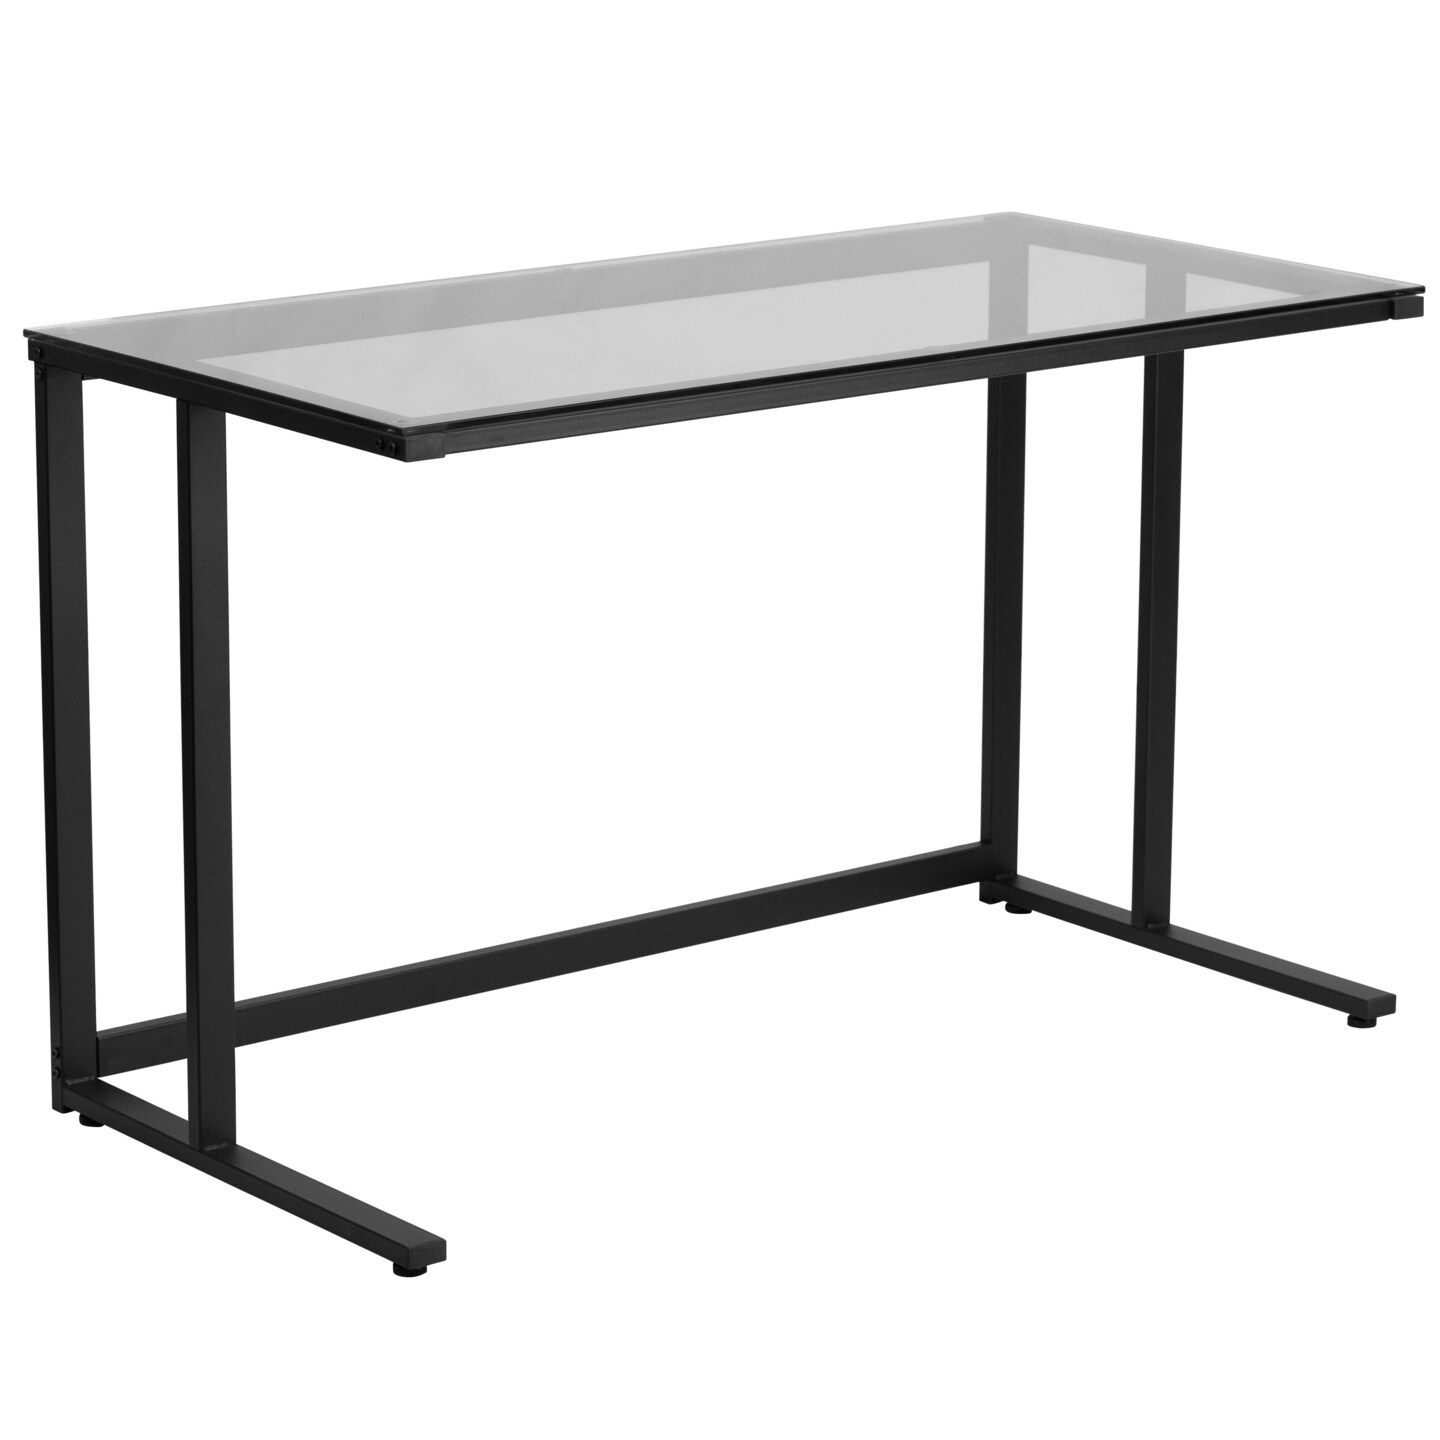 Emma and Oliver Glass Top Desk with Pedestal Metal Frame - Home Office Furniture